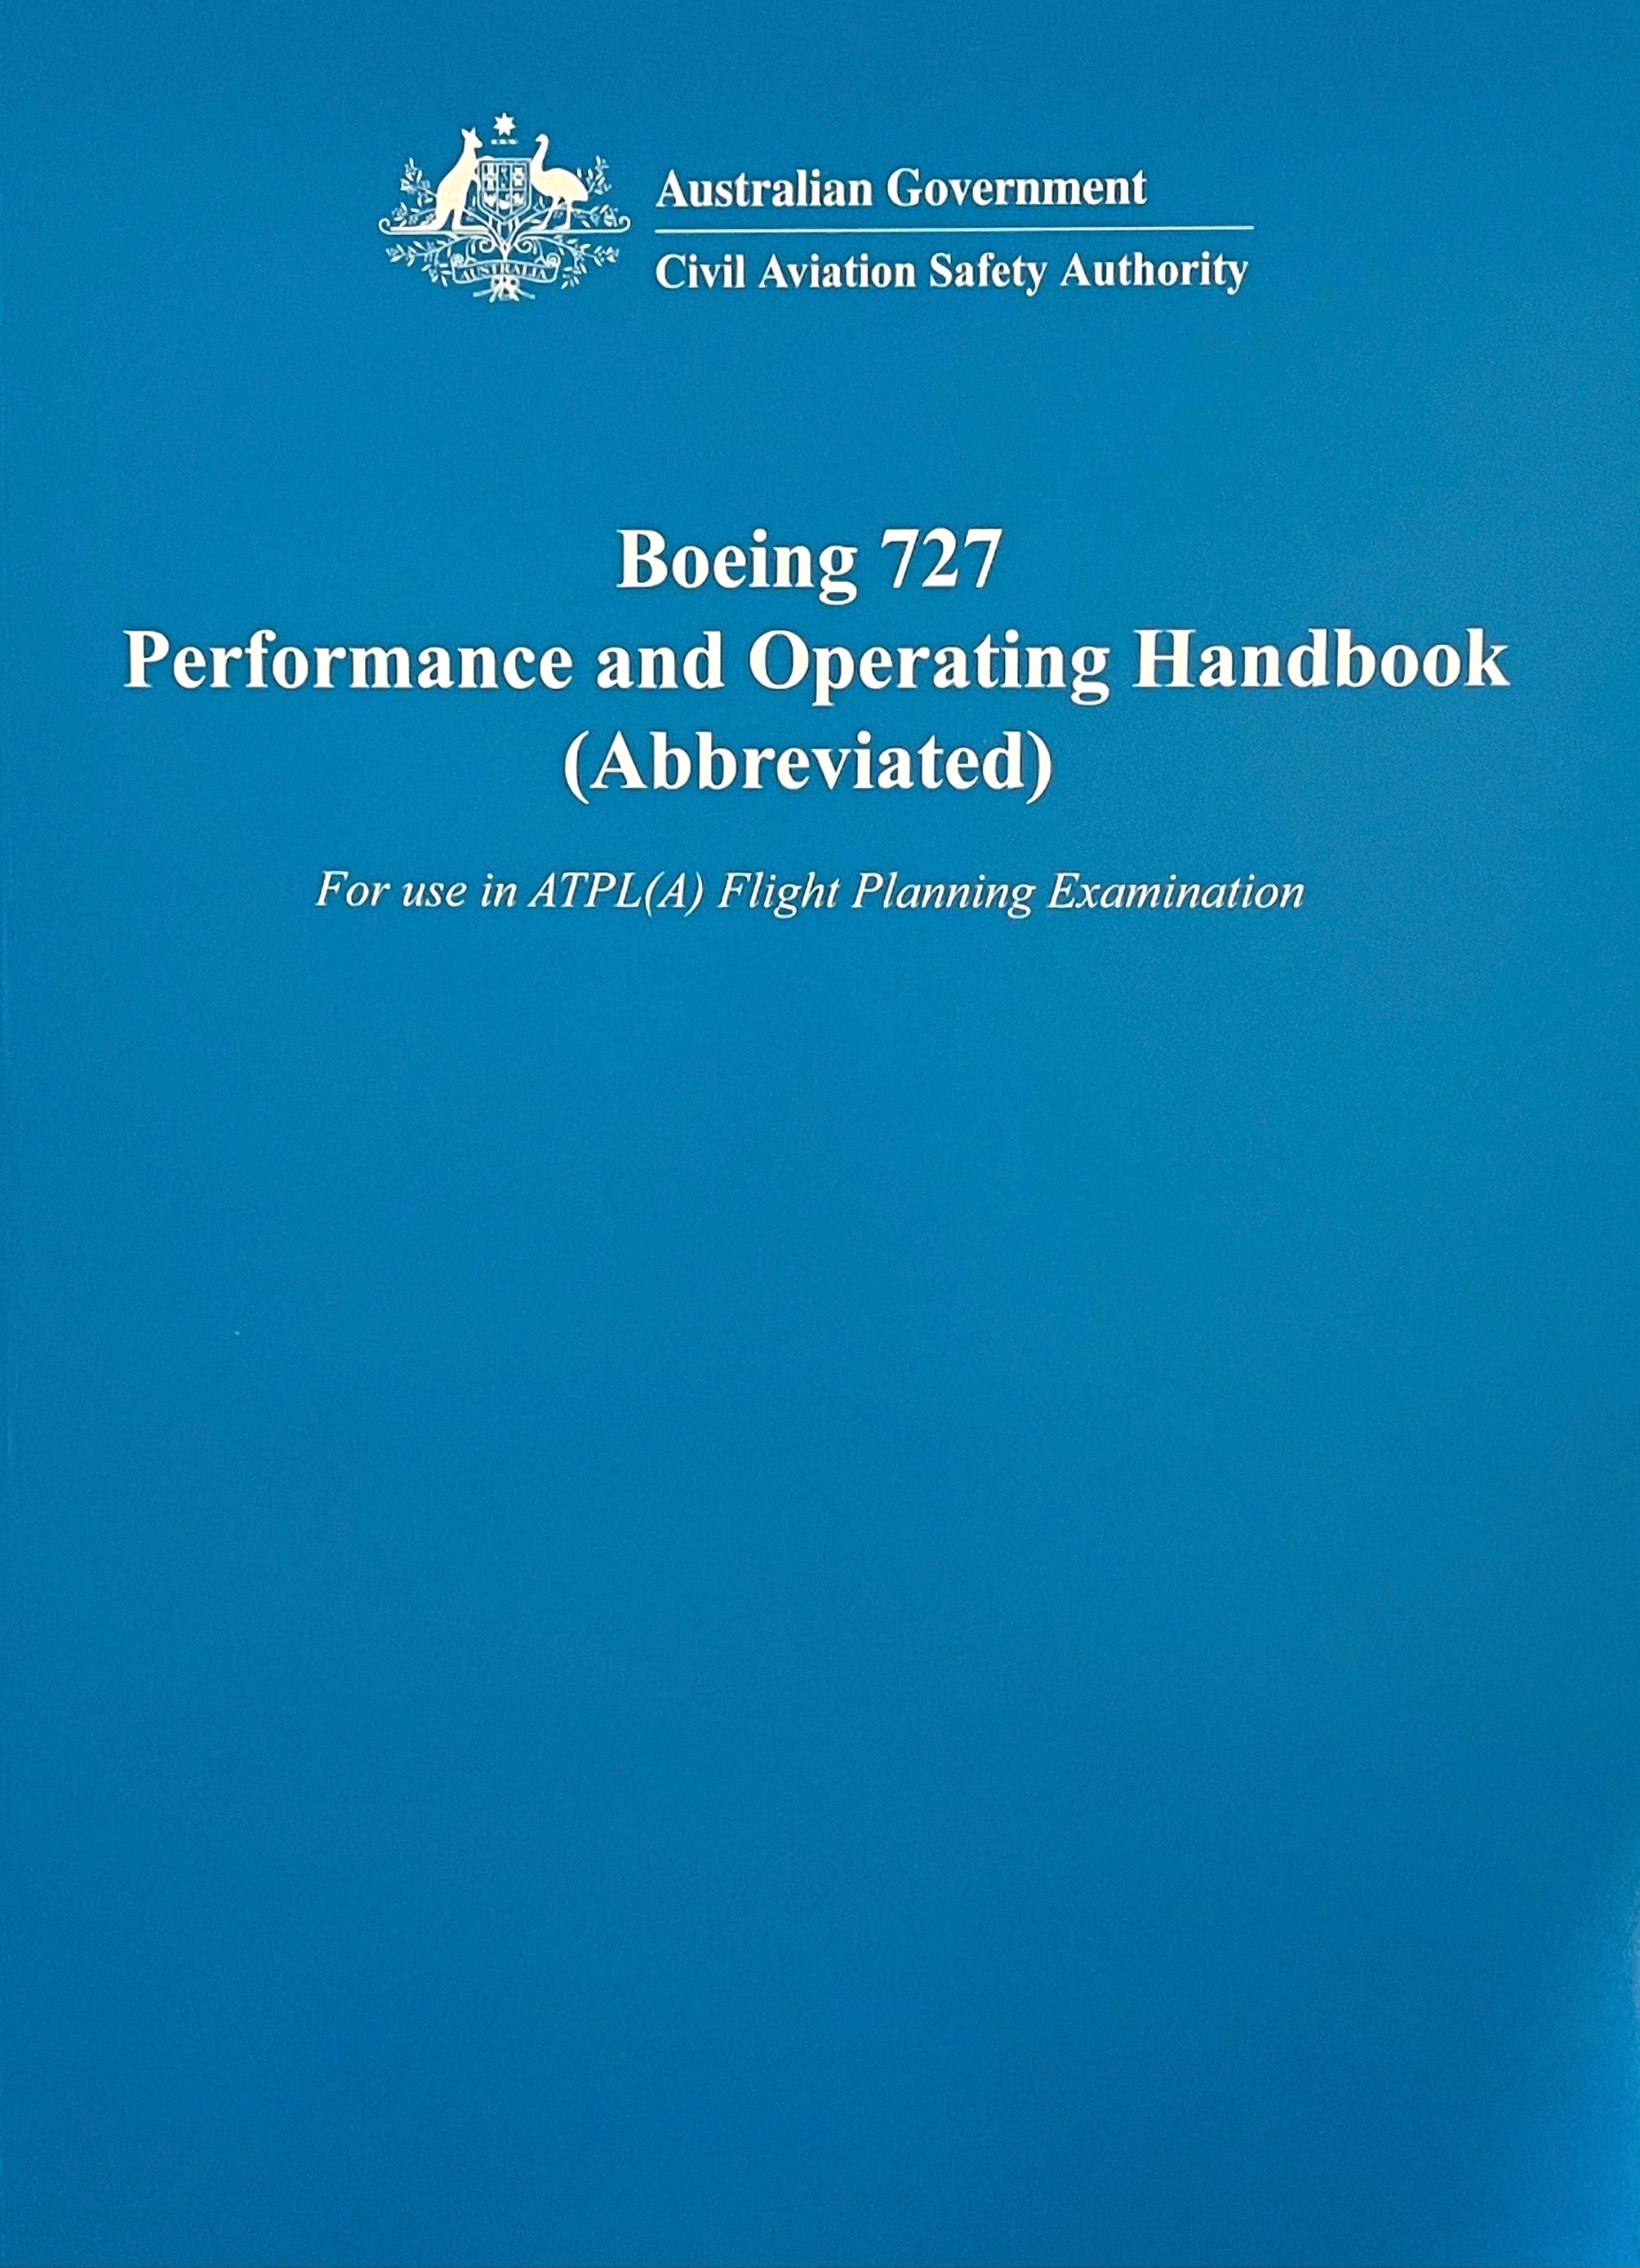 Boeing 727 Performance & Operating Handbook